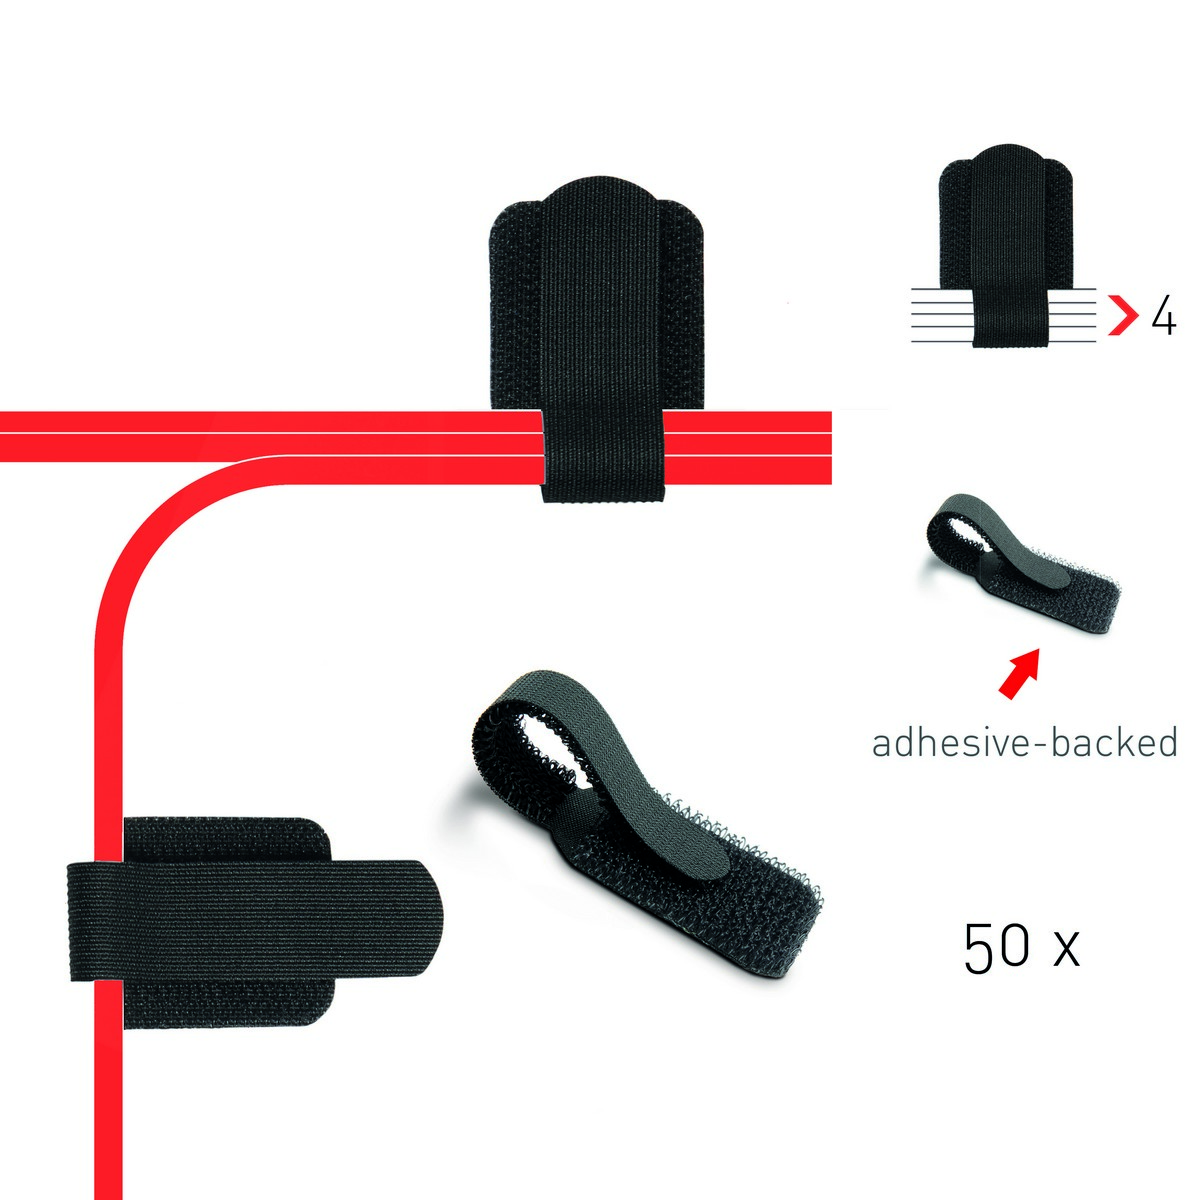 LTC - LTC Pro Wall, Cable Management Clips Self-Adhesive (black)